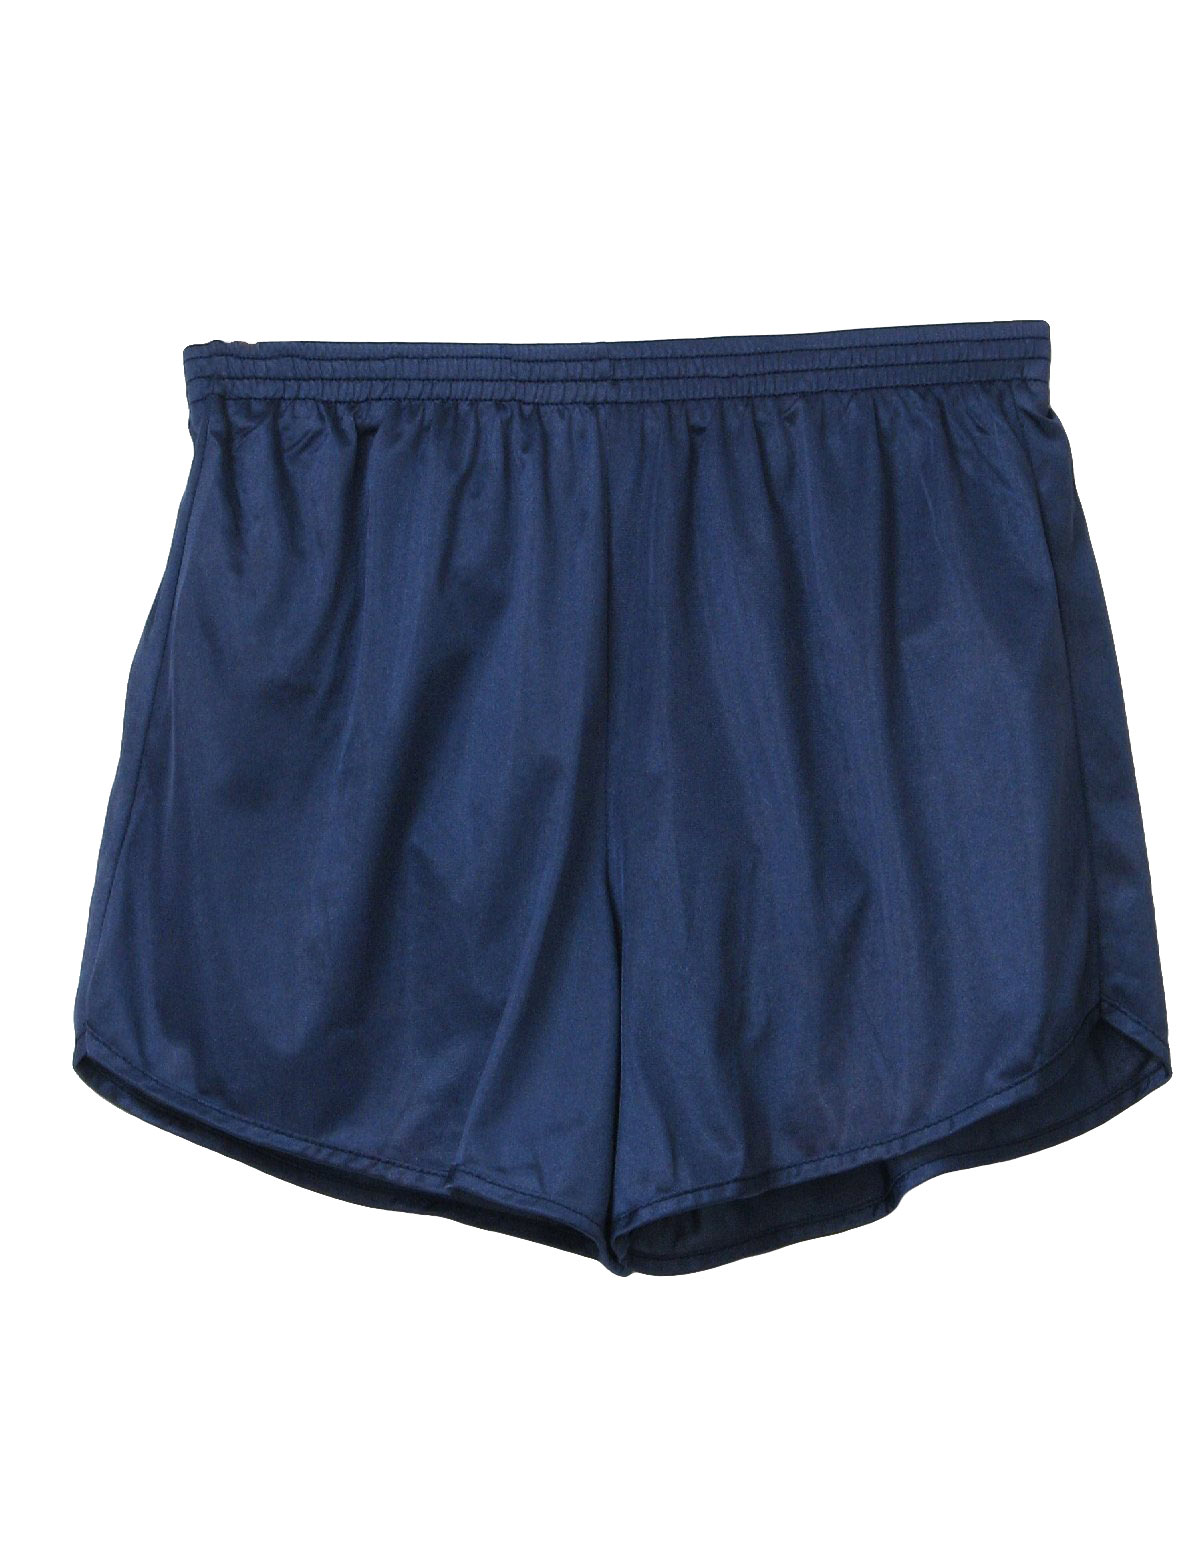 80s Retro Shorts: 80s -Cobblestones- Mens blue brief lined nylon high ...